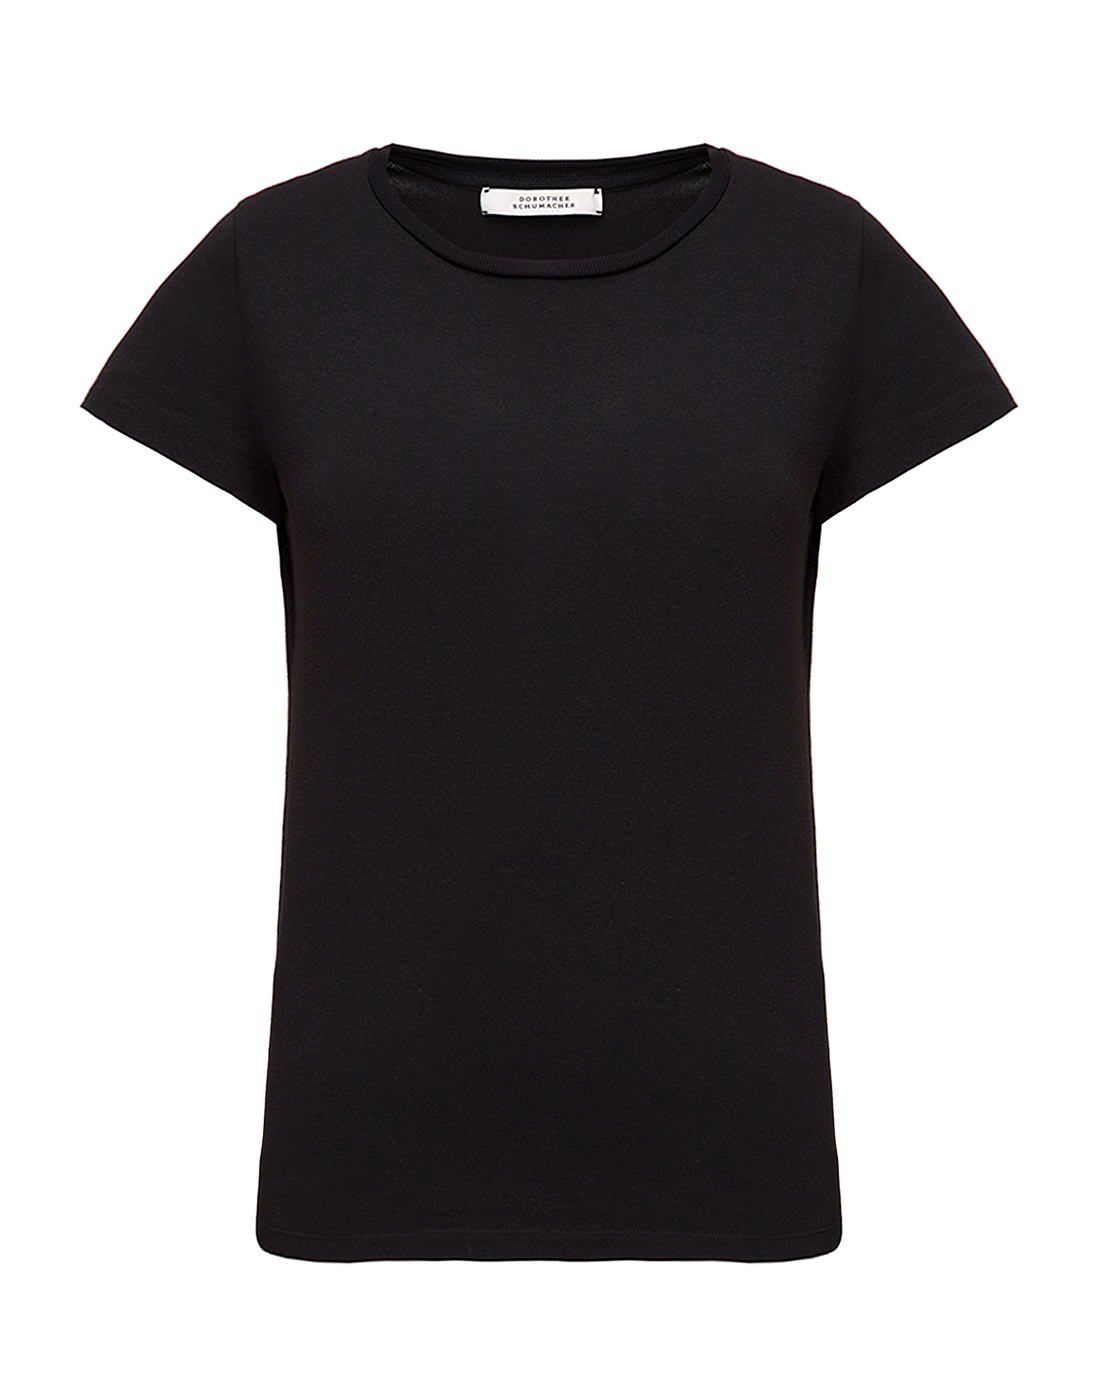 Женская черная футболка Dorothee Schumacher S523301/999-1